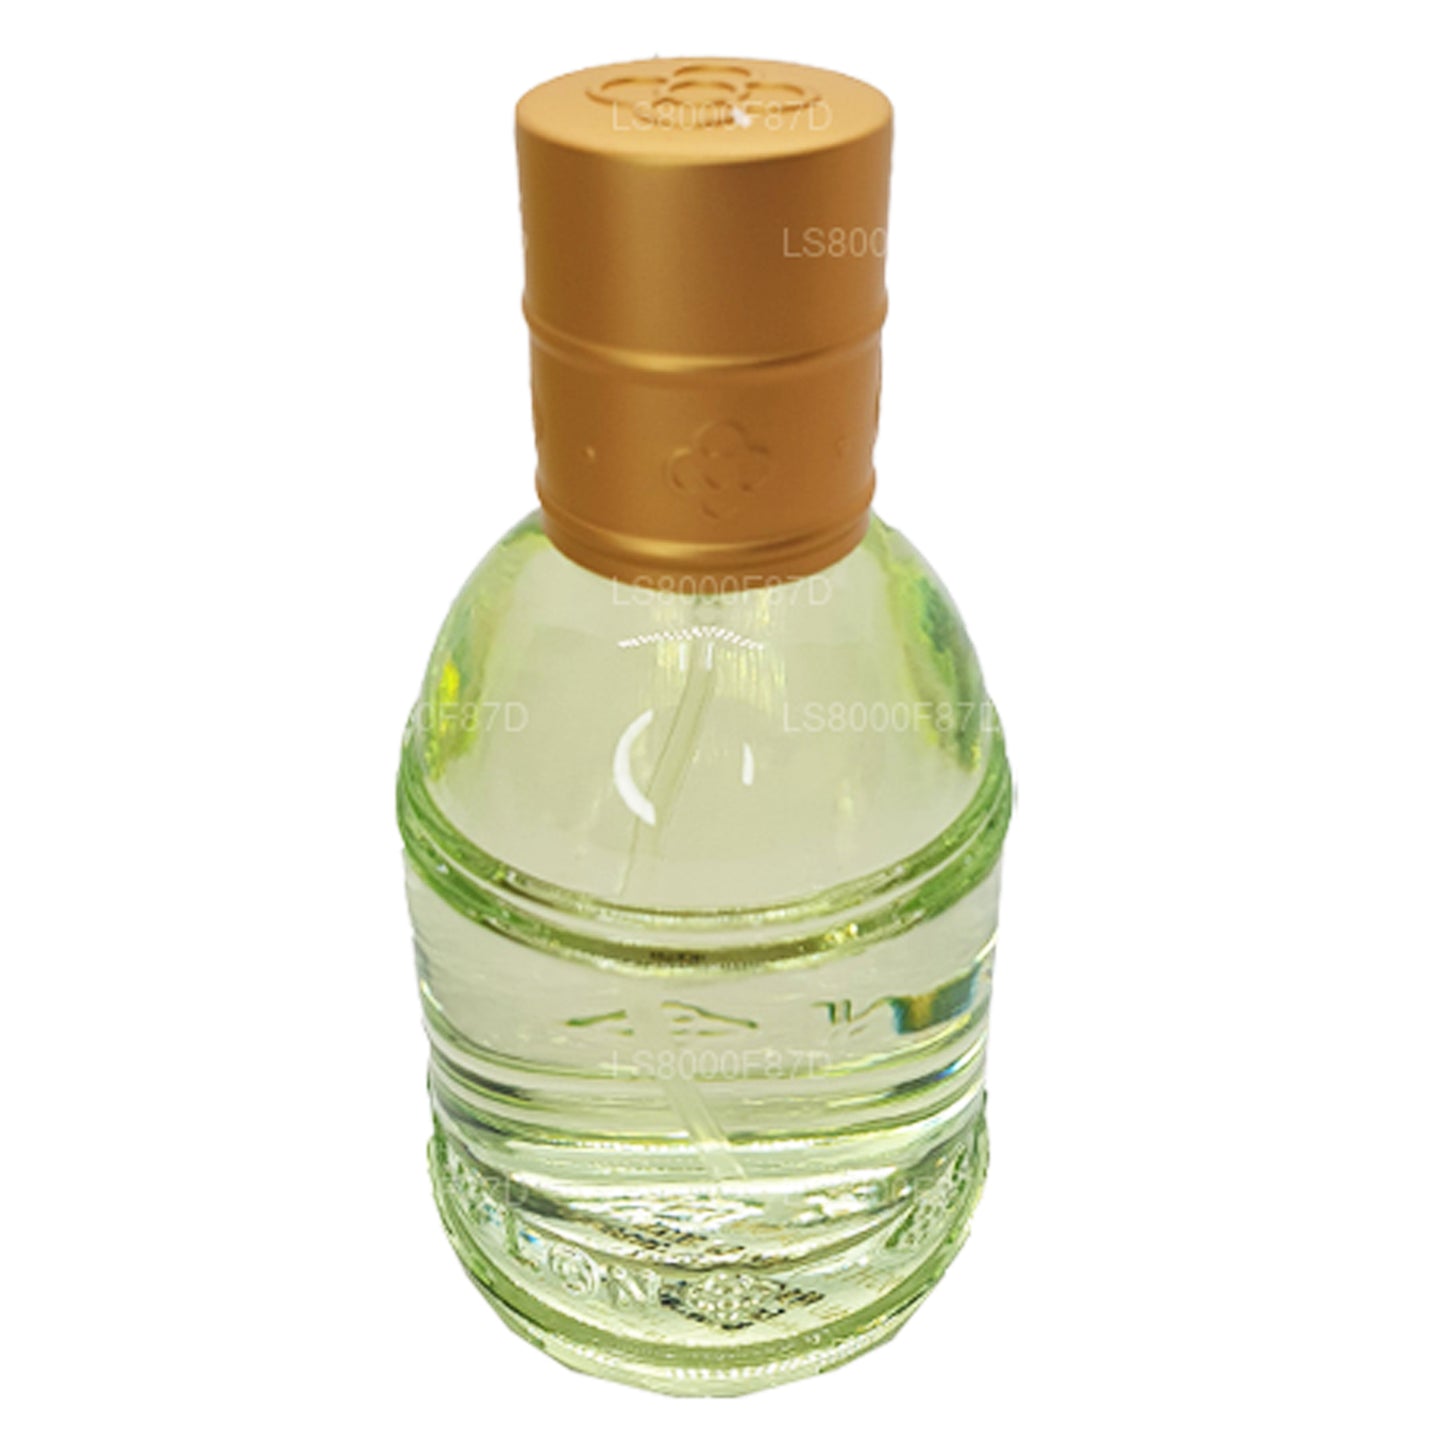 Spa Ceylon Night Jasmine Eau De Perfume etherische olie gemengd (50 ml)